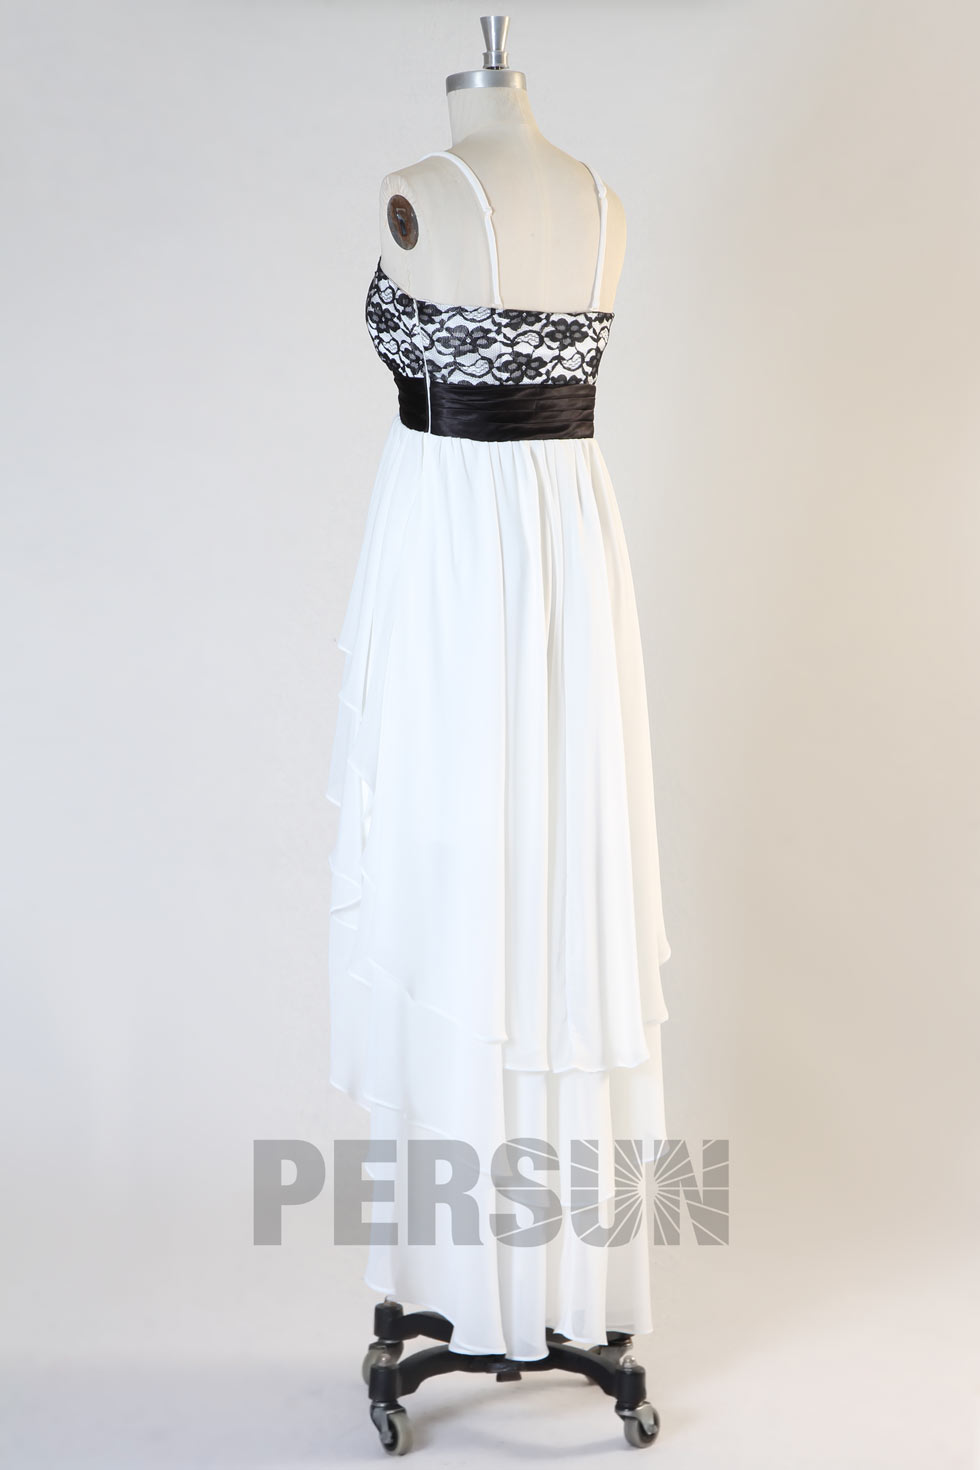 Persun Silky Chiffon Black & White A line High Low Formal Dress